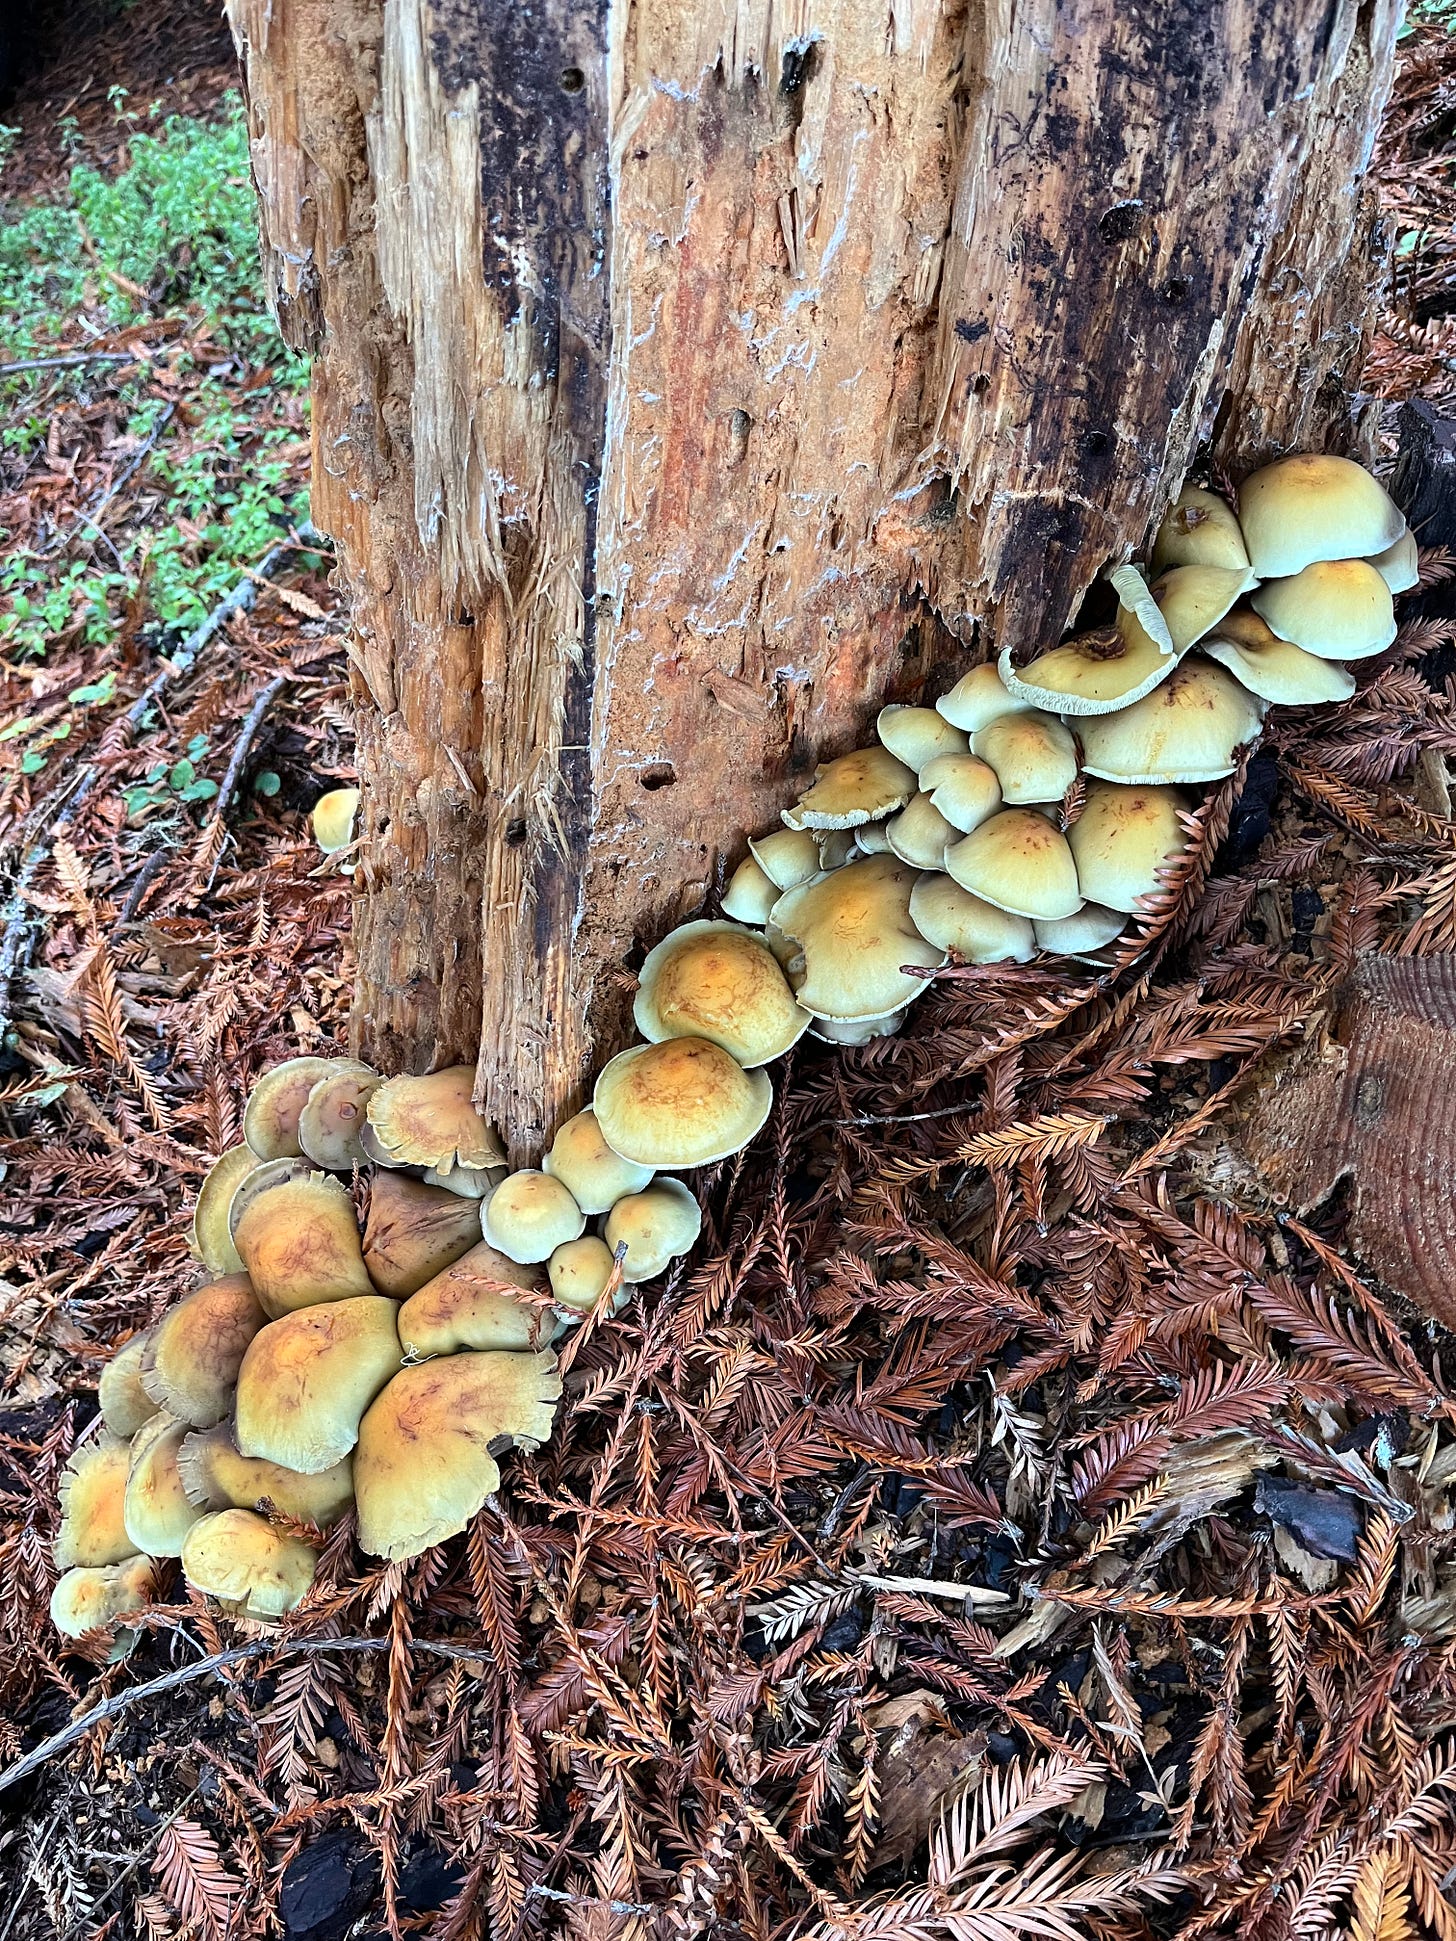 Suffer tuft mushrooms growing around a dead stump